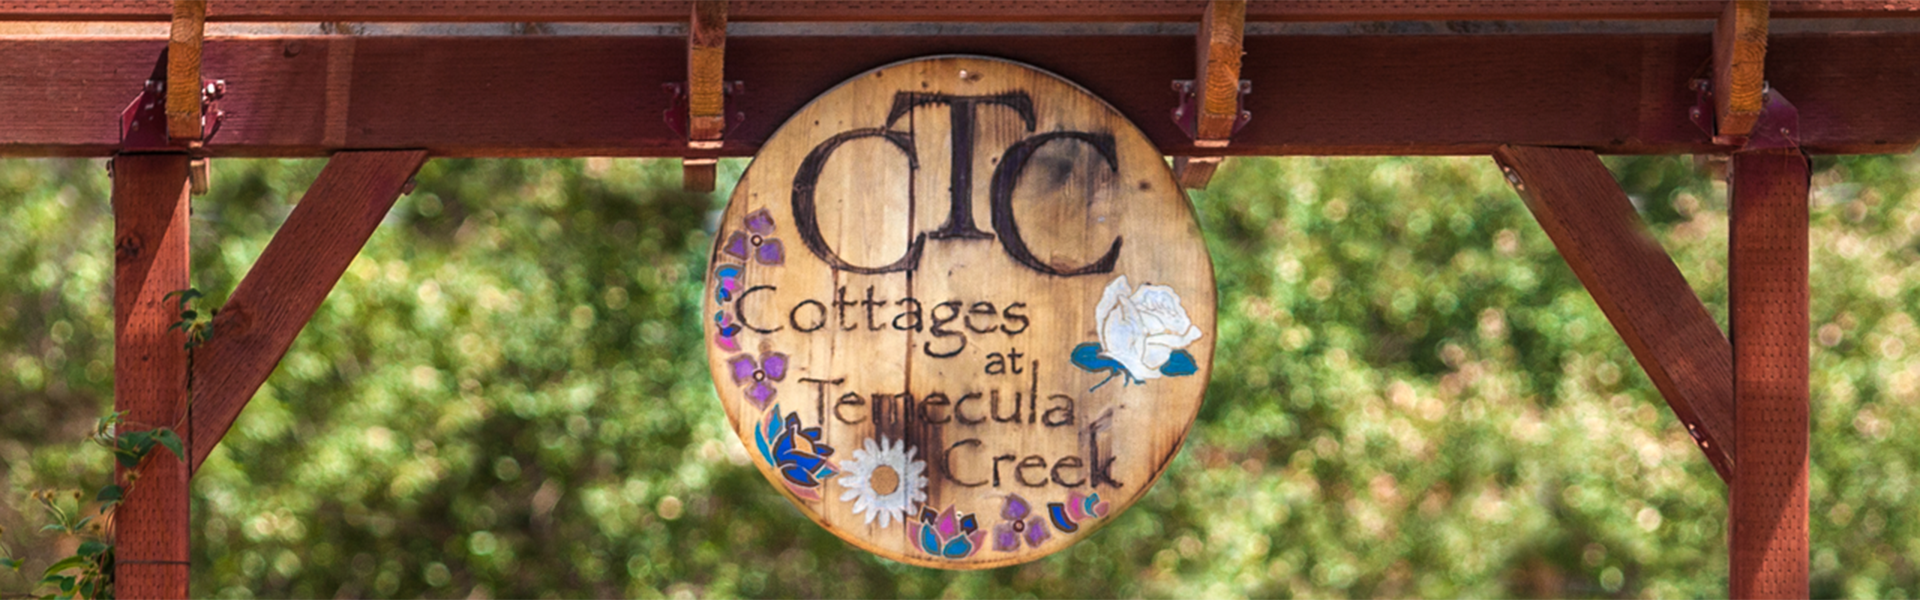 Temecula-Creek-Cottages